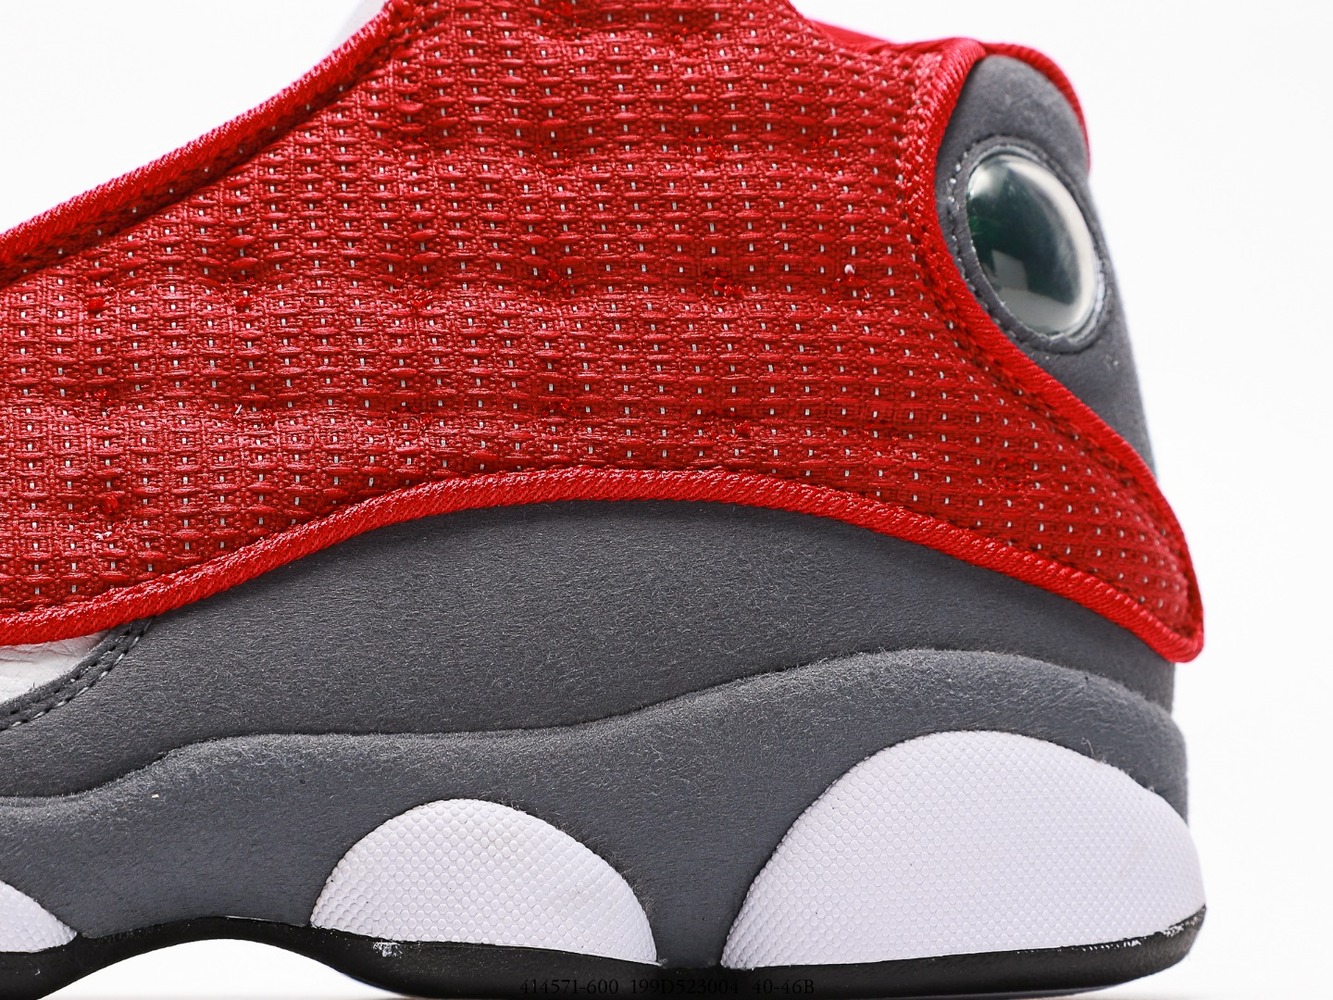 Air Jordan 13 Retro
Gym Red Flint Grey (PS)  414571-600